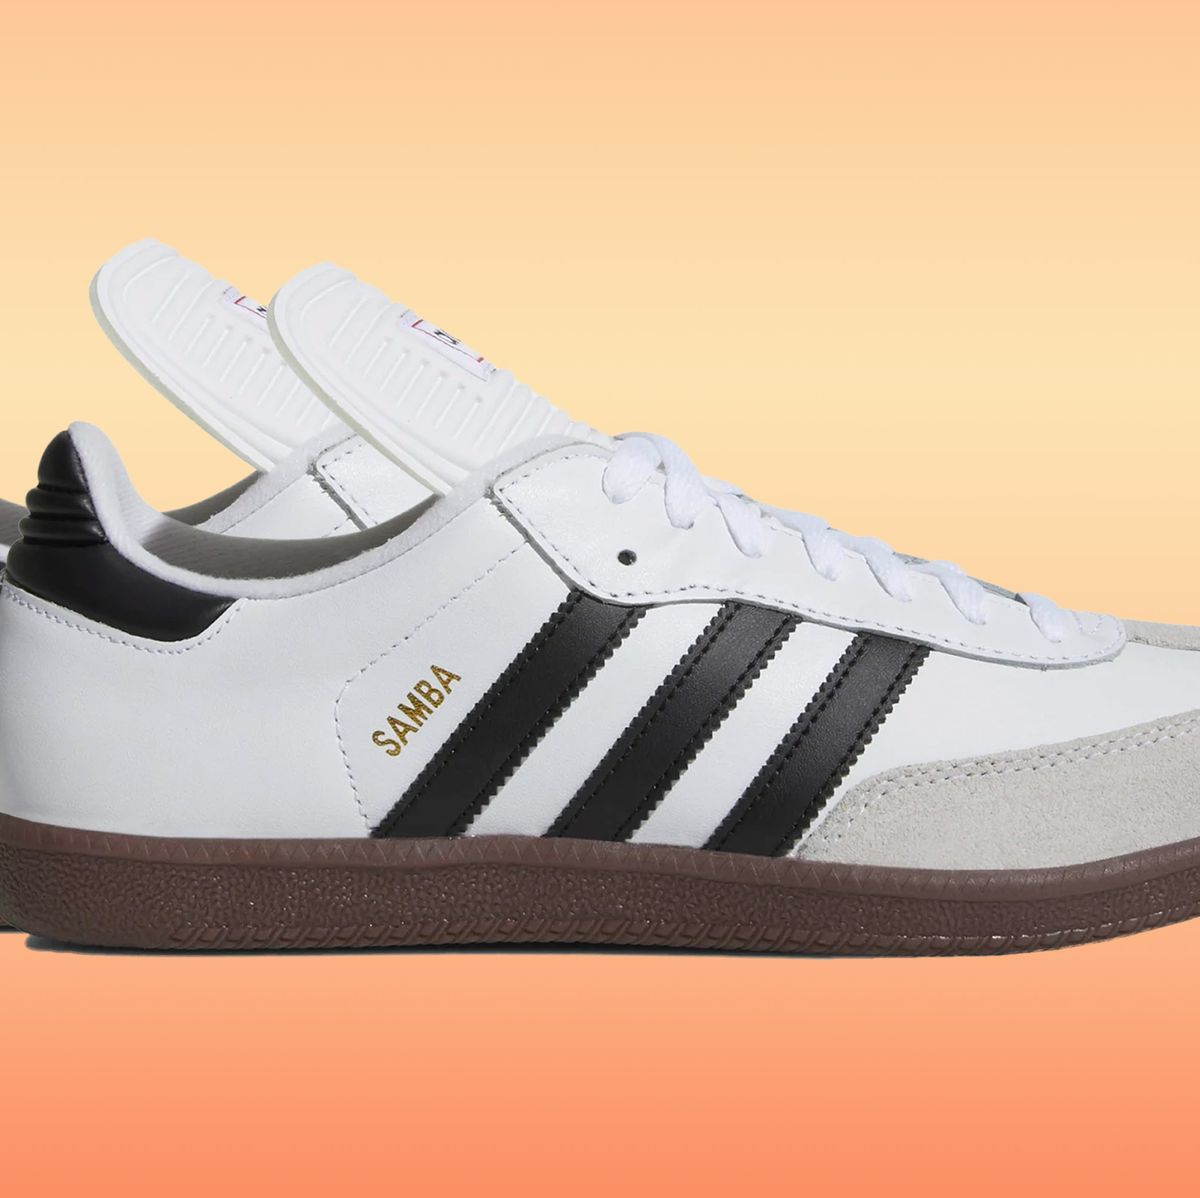 The Adidas Samba Is Still the "It" Sneaker.